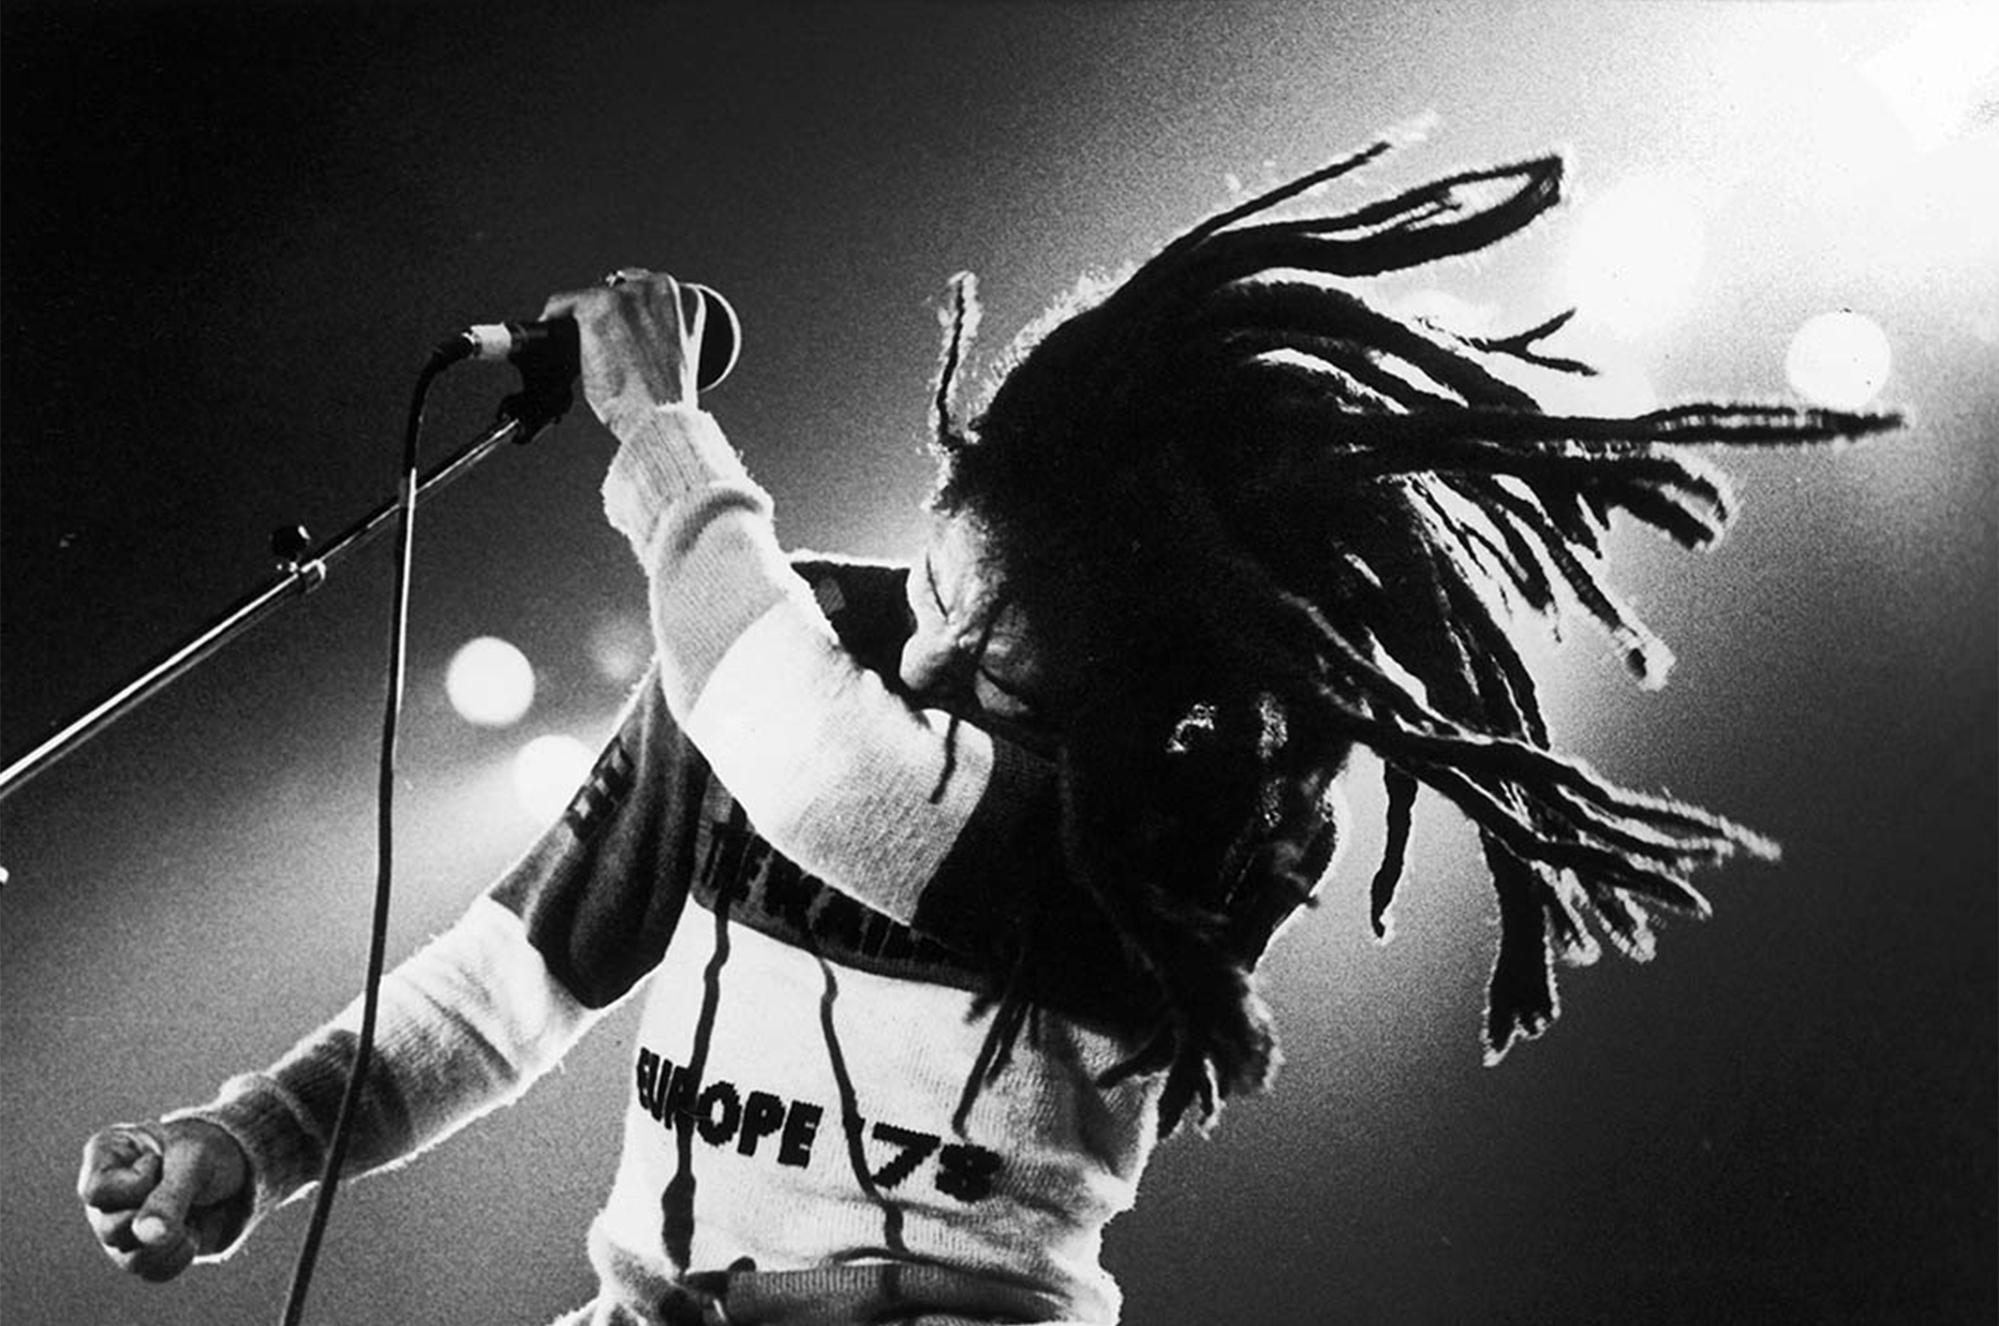 Kevin Cummins Black and White Photograph – Bob Marley